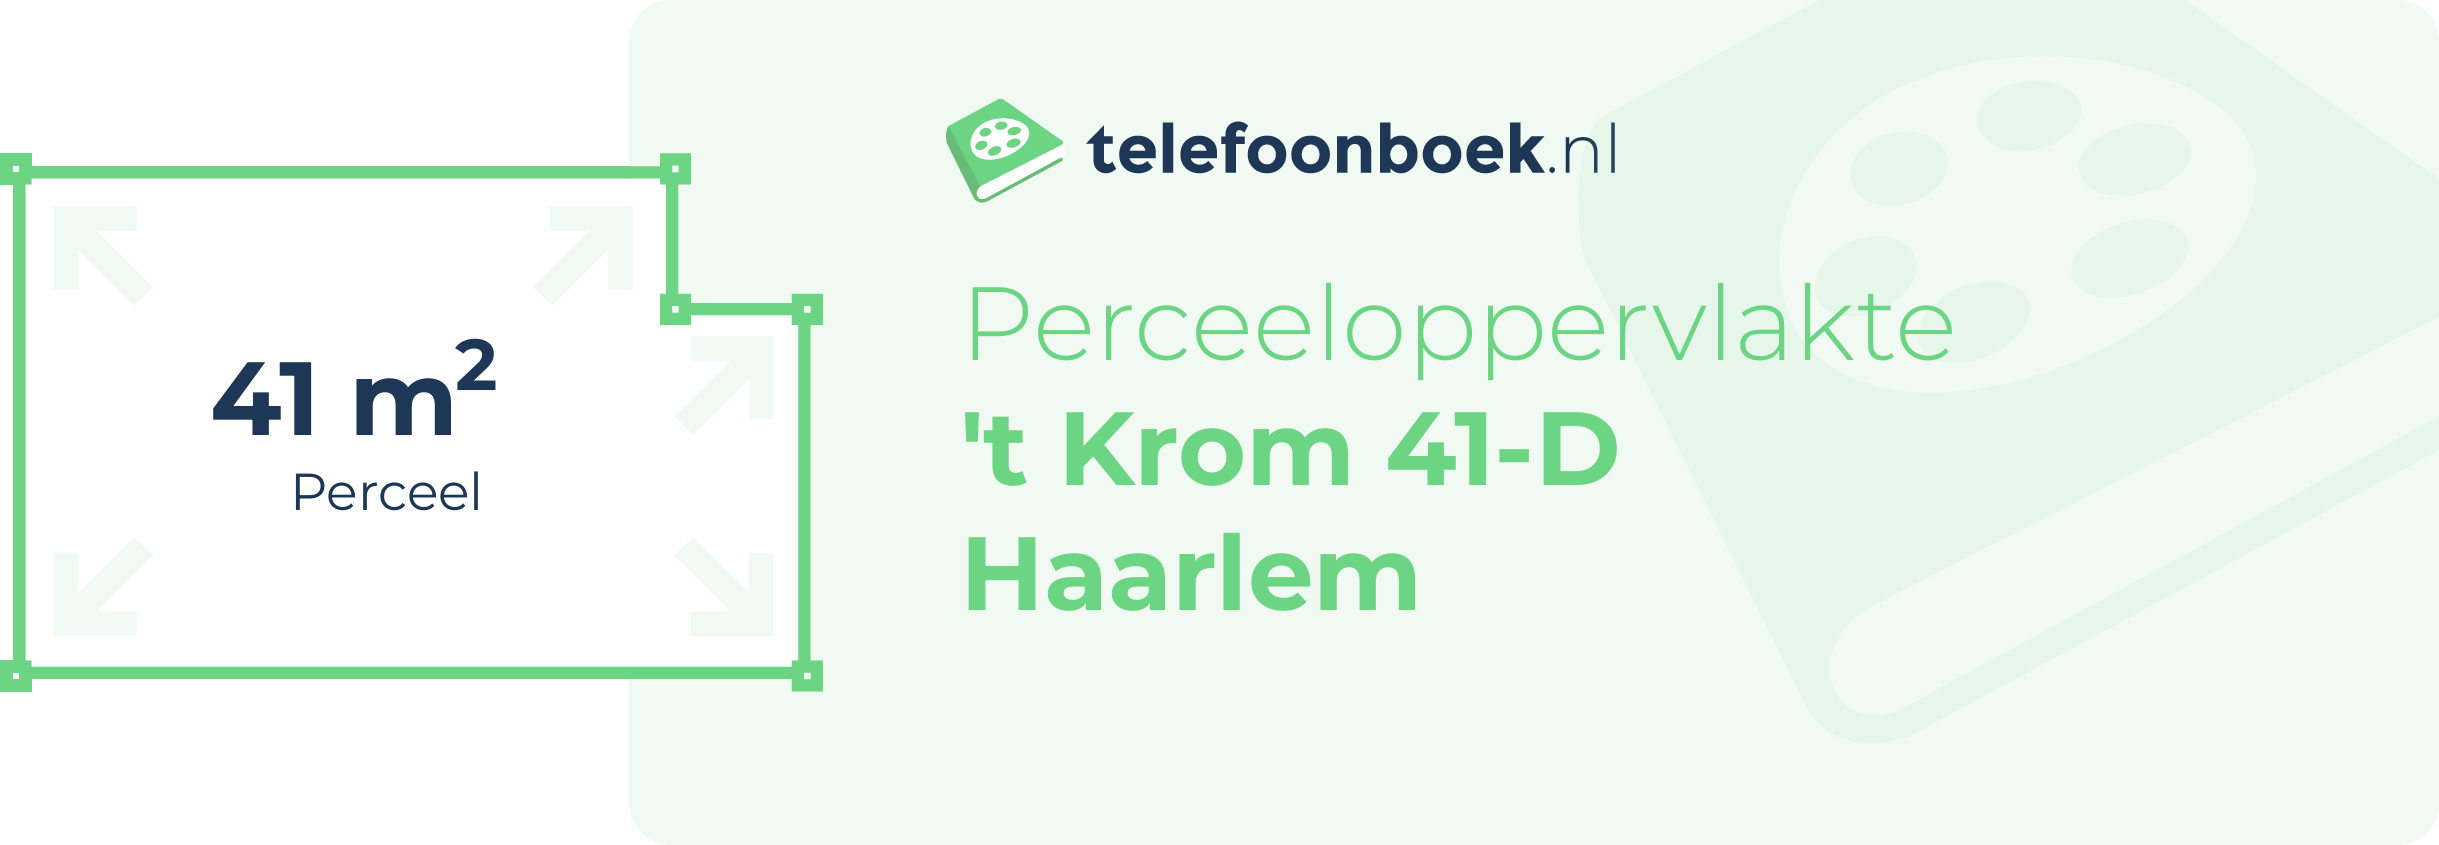 Perceeloppervlakte 't Krom 41-D Haarlem